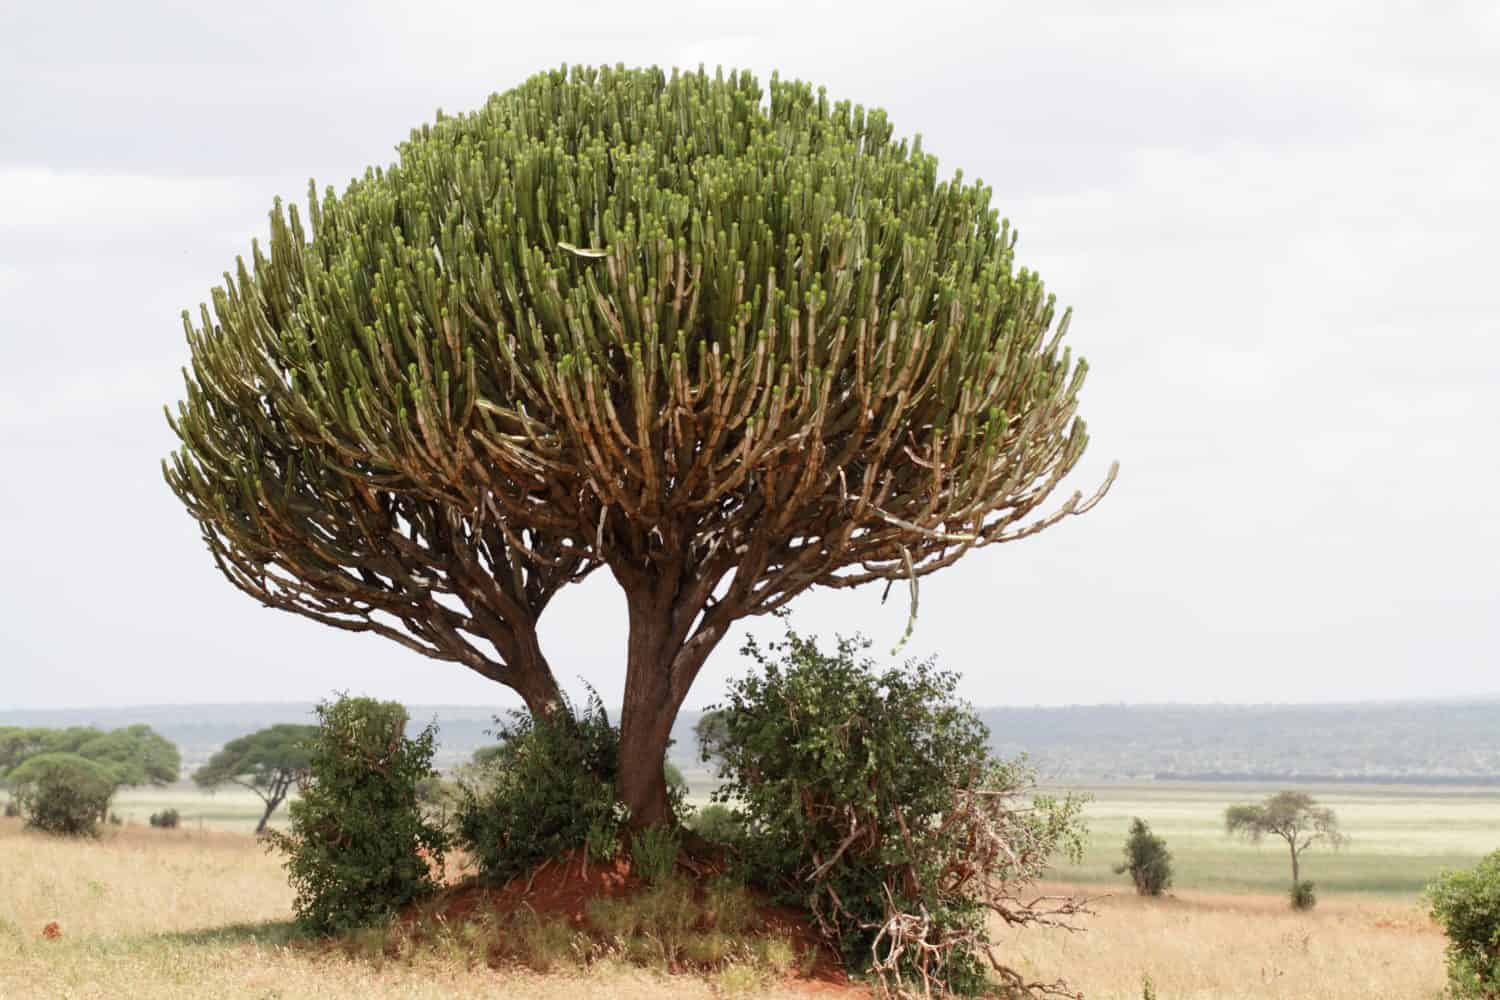 Euphorbia candelabra tree in the african savanna